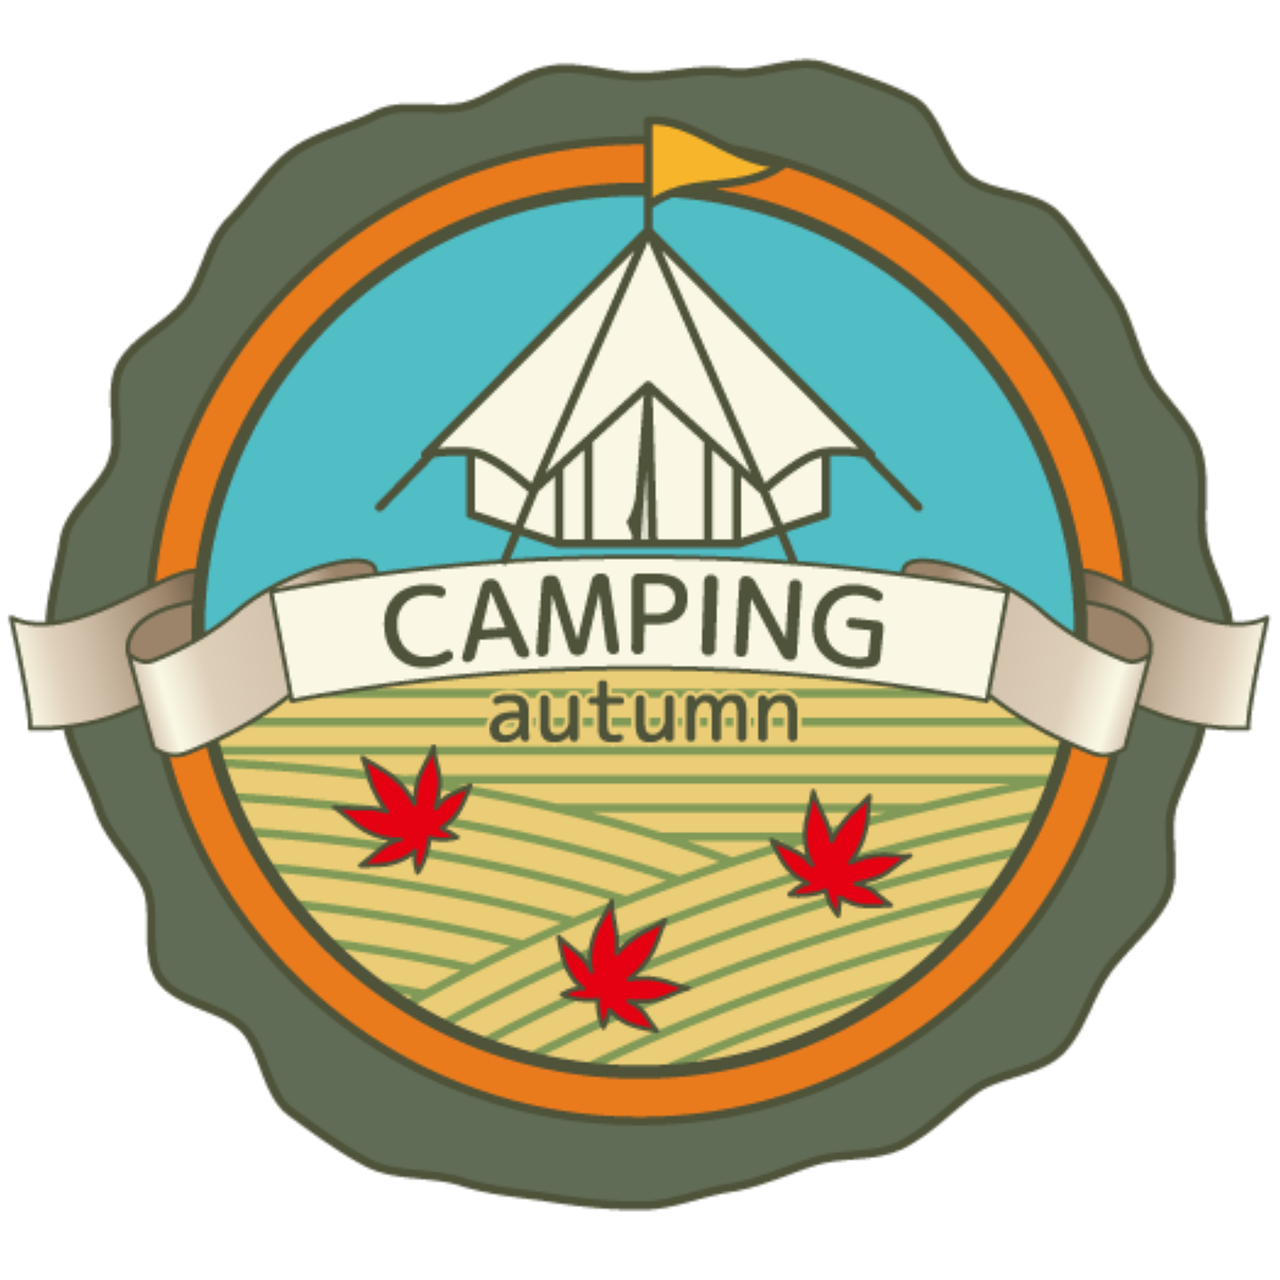 the camping autumn badge, a digital rendering, shutterstock, sōsaku hanga, 3 4 5 3 1, square, cad, image